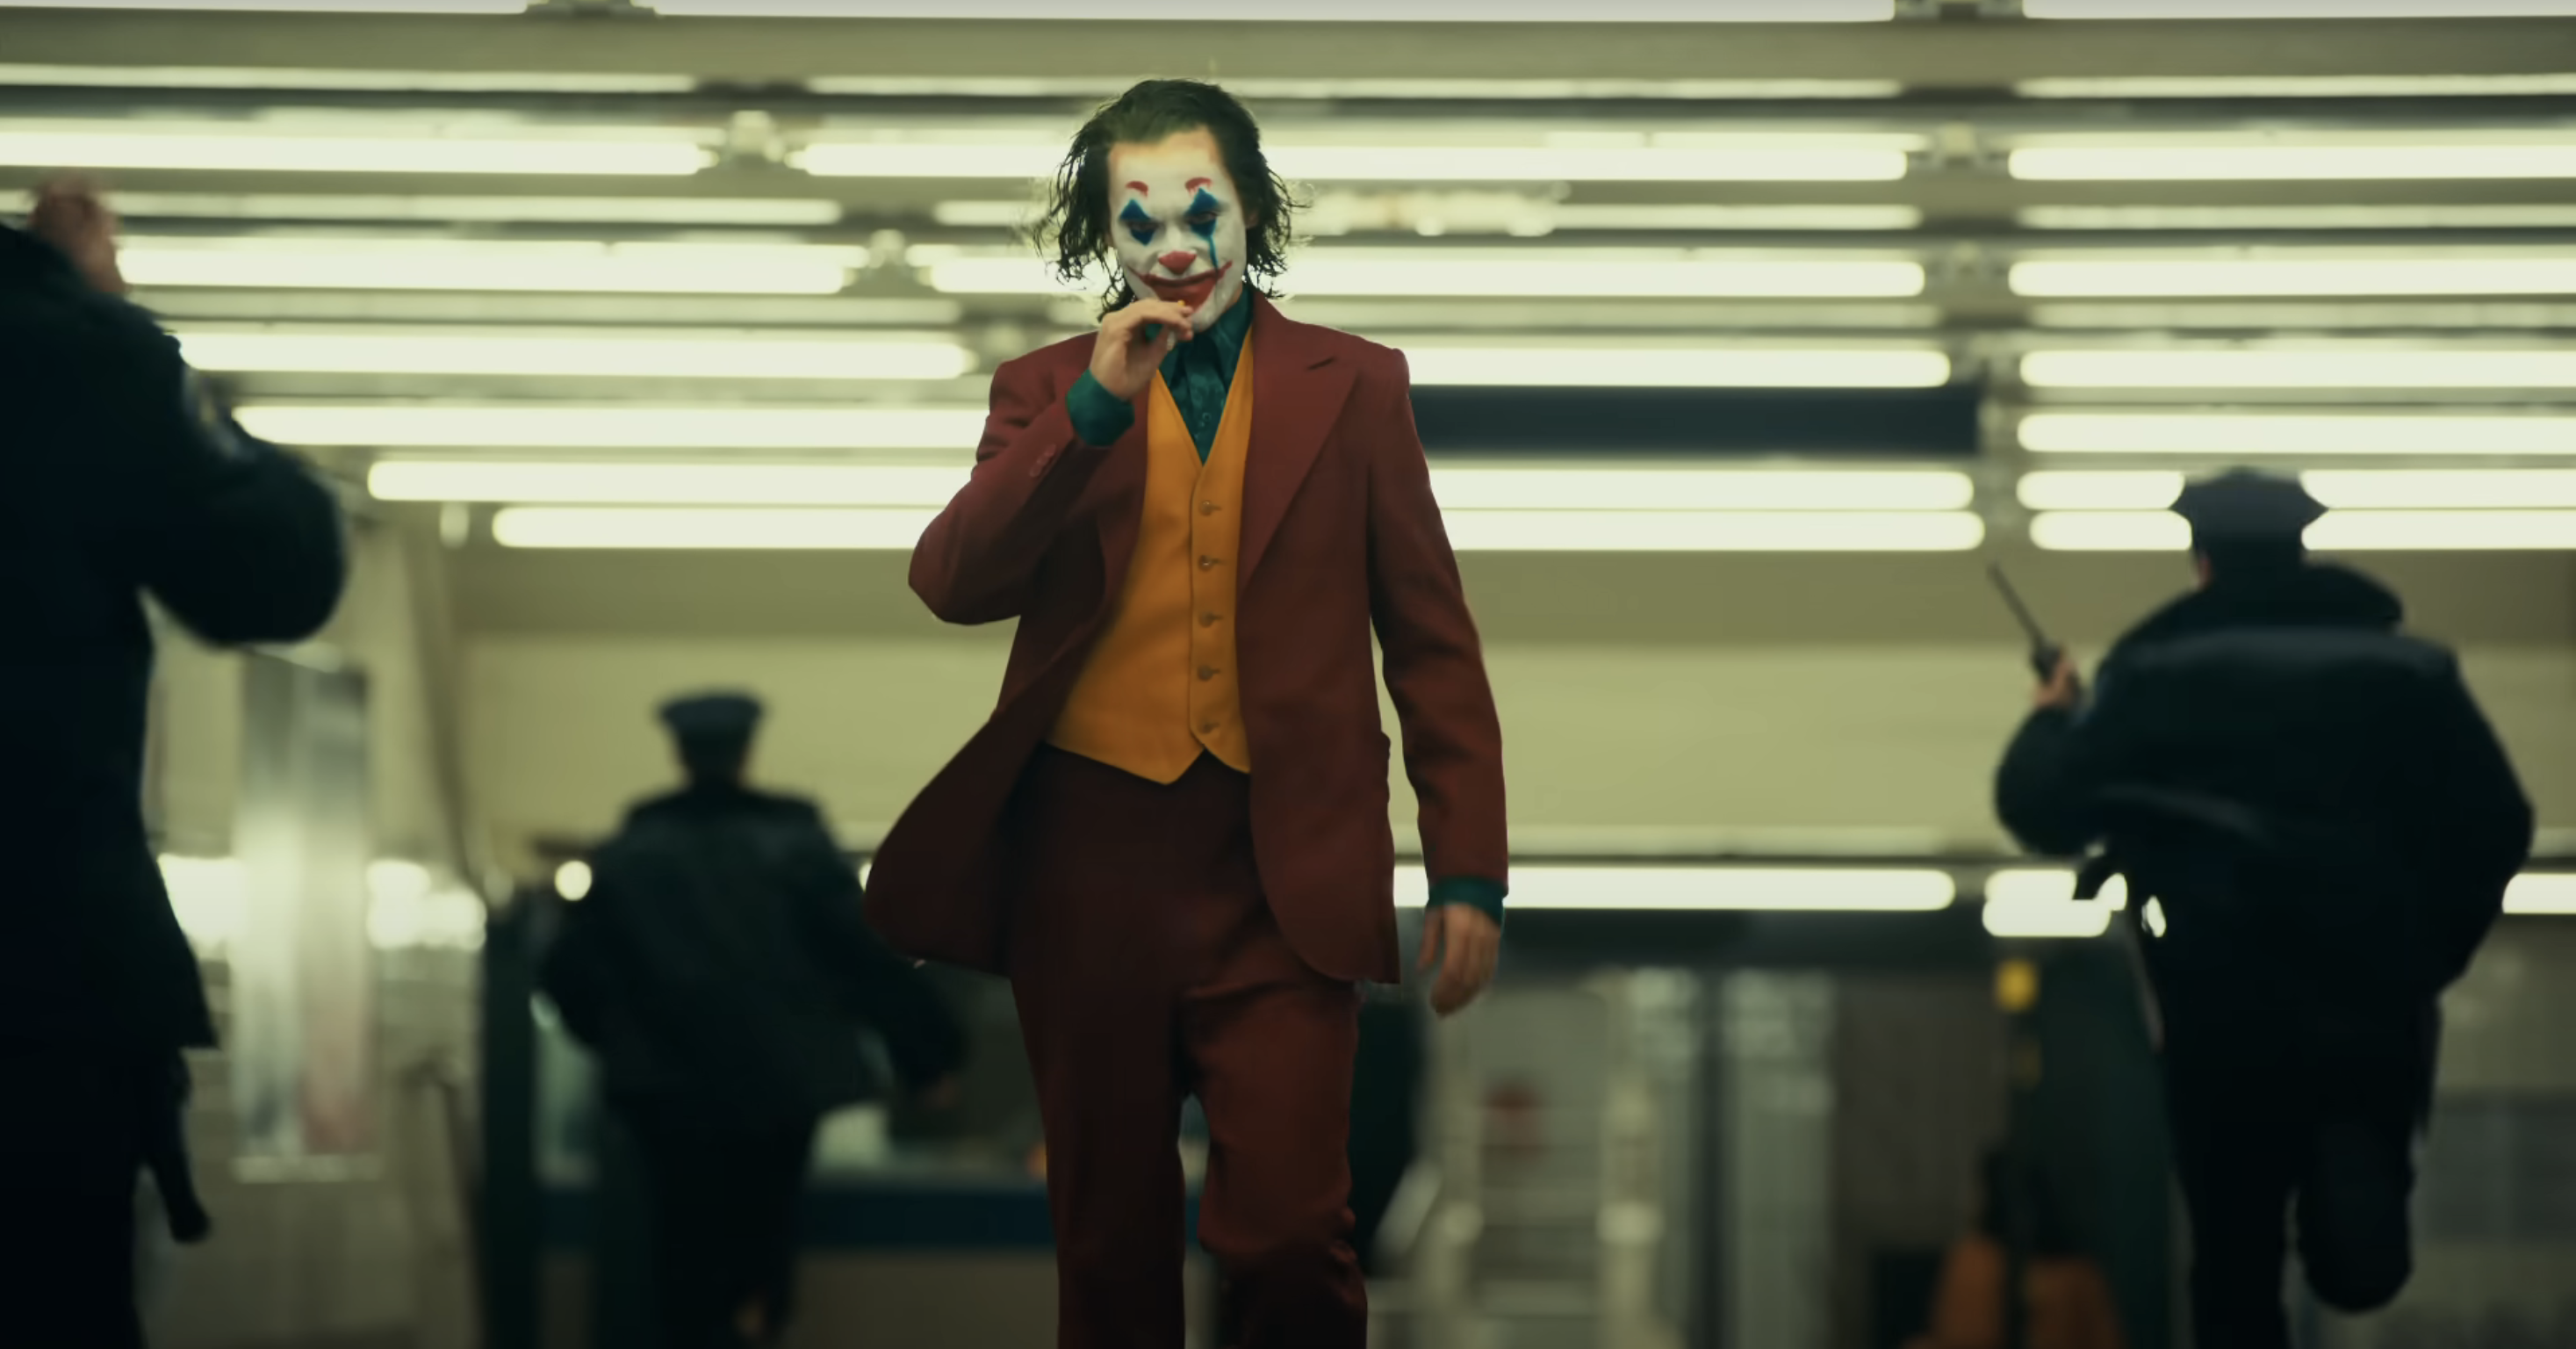 Joaquin Phoenix as Joker in a suit, walking in a train station from the film